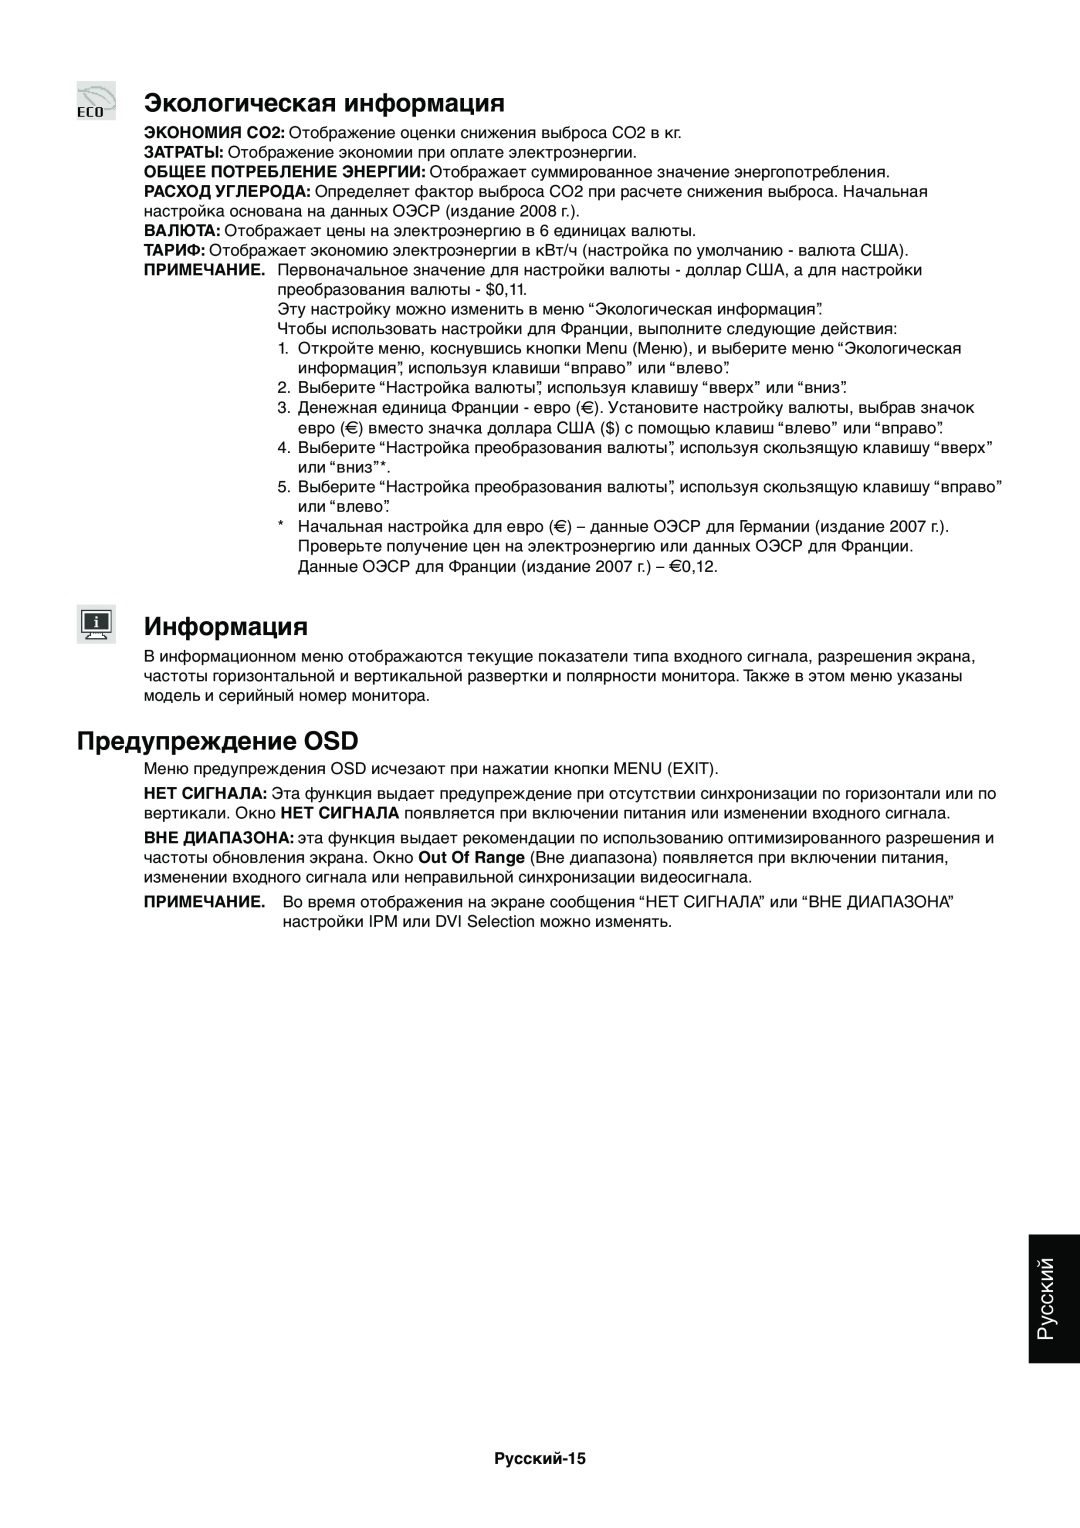 NEC EX231WP manual Экологическая информация, Информация, Предупреждение OSD, Русский-15 